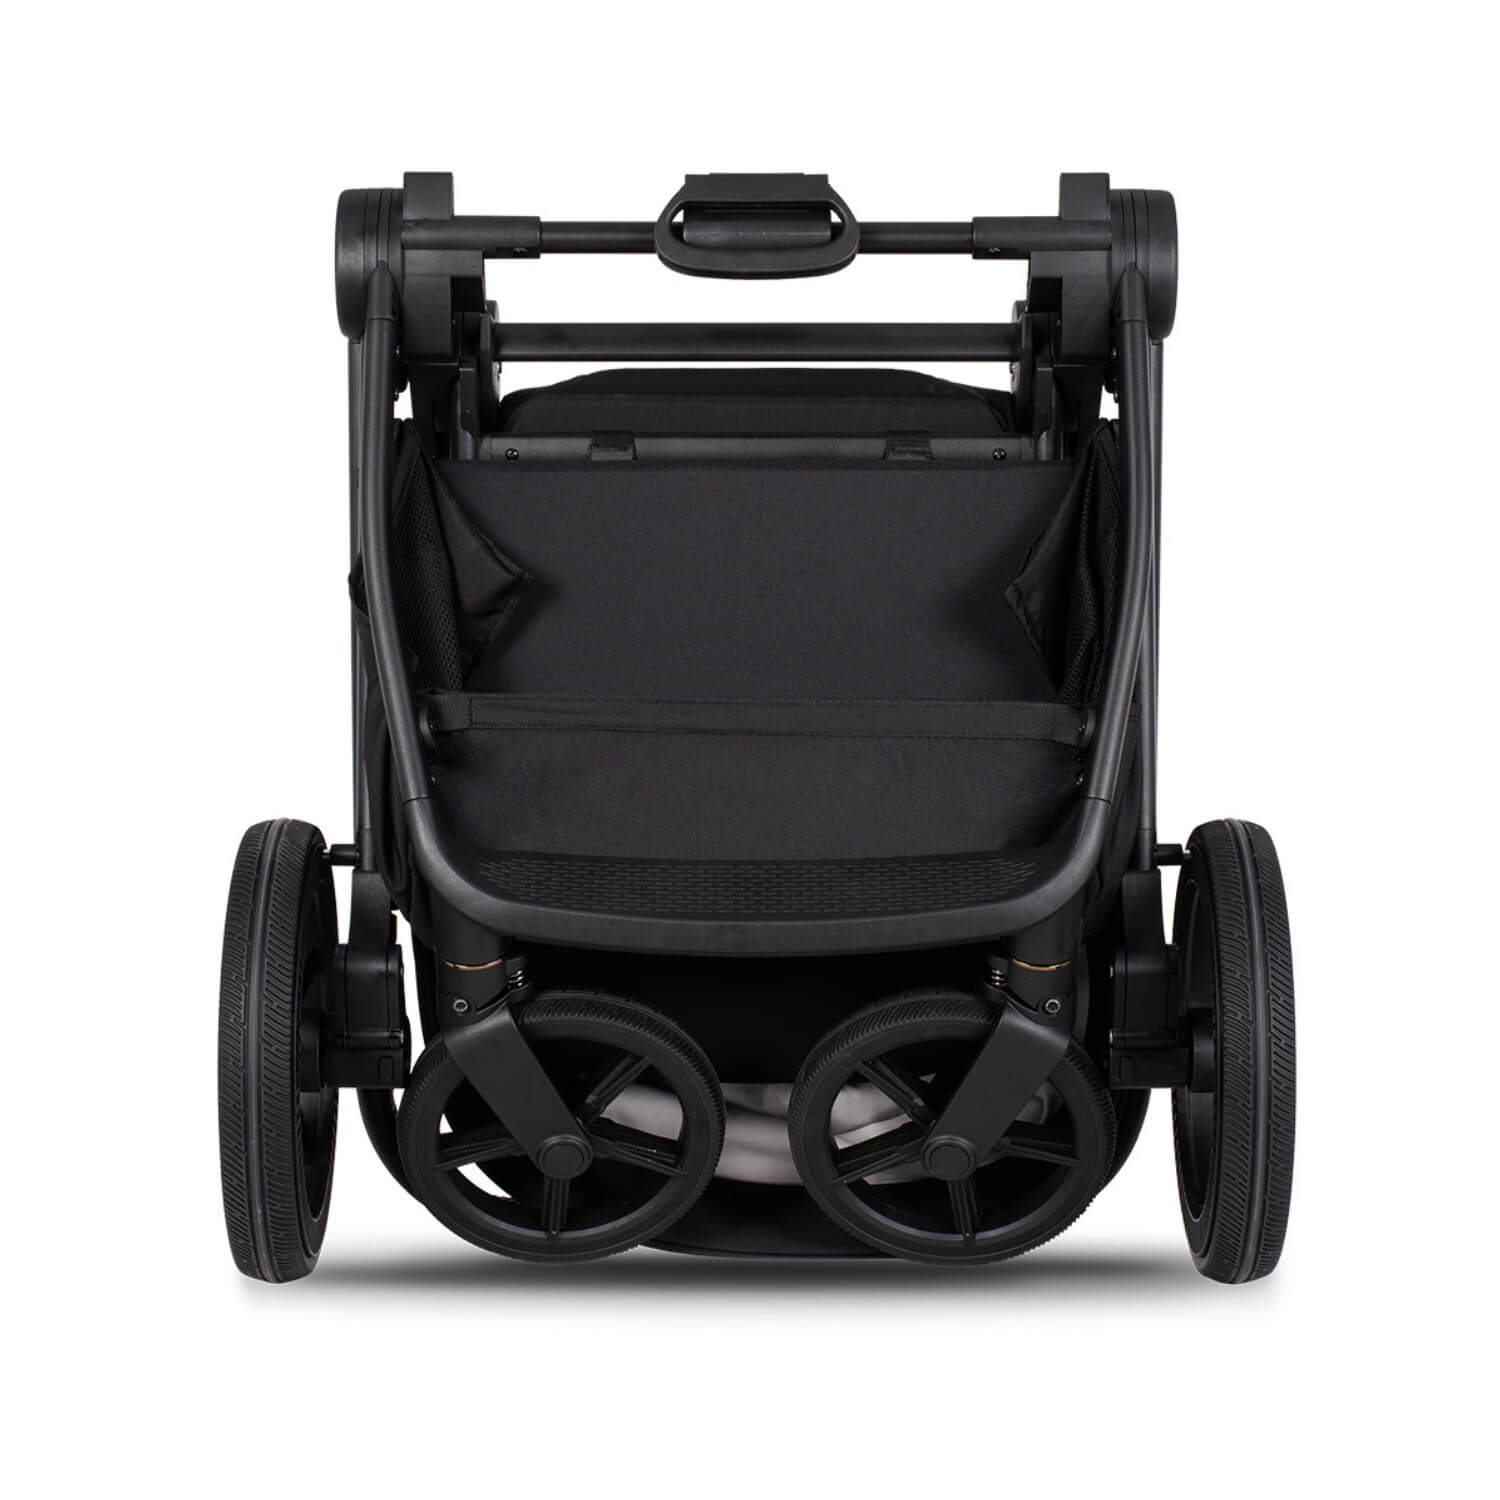 Front view of folded Venicci Claro pushchair seat in Noir black colour